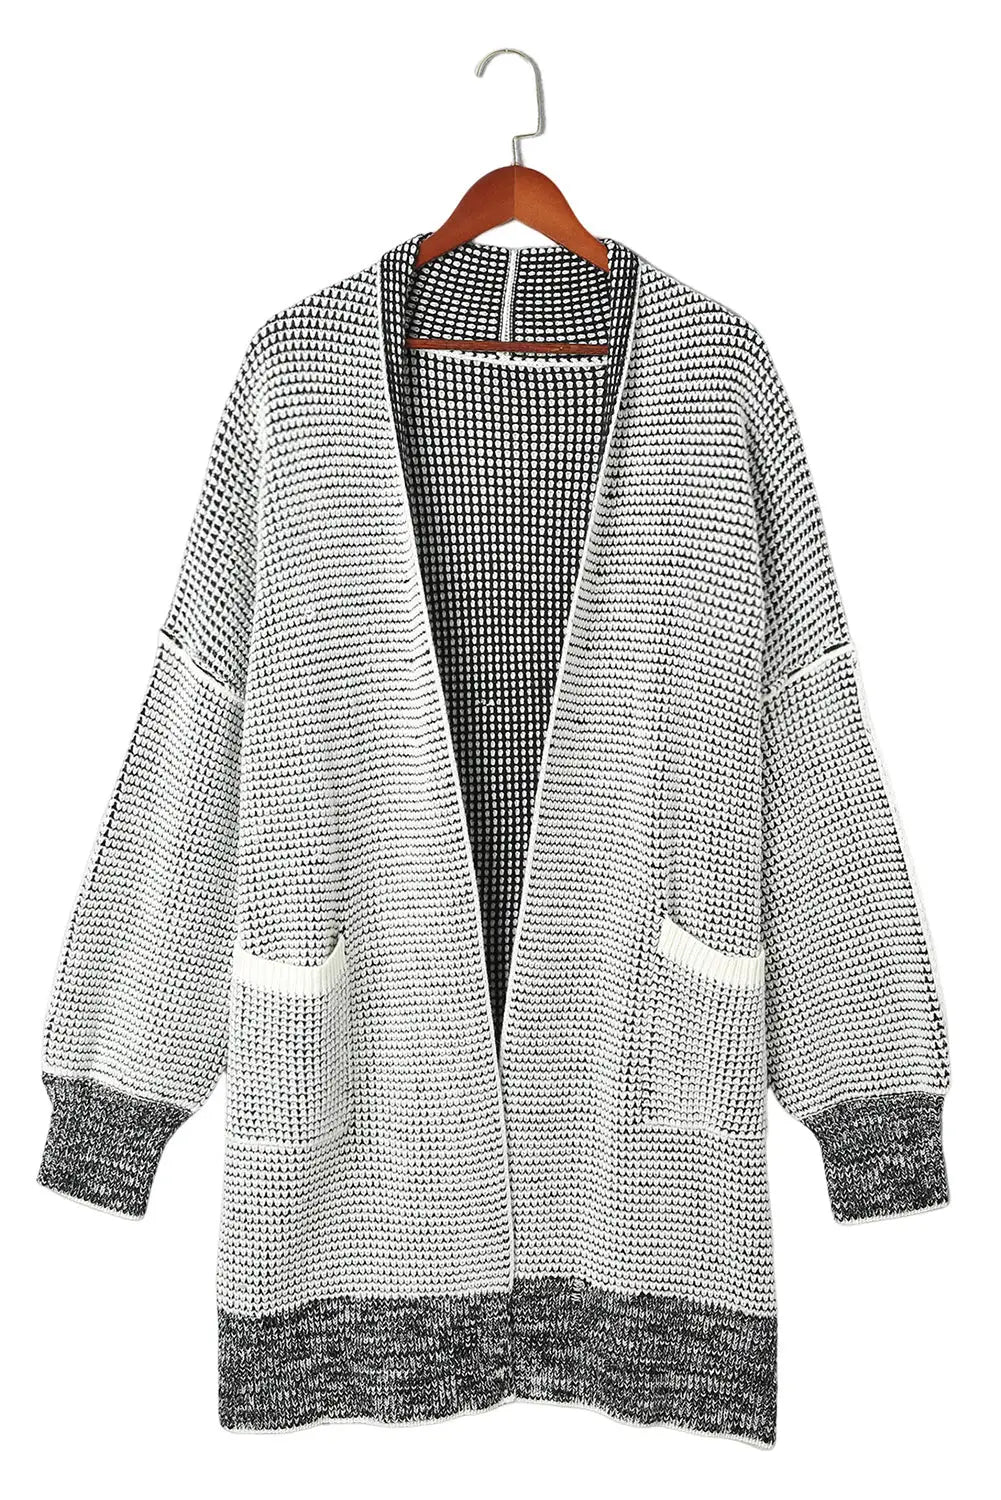 Grey plaid contrast trim open front cardigan - tops